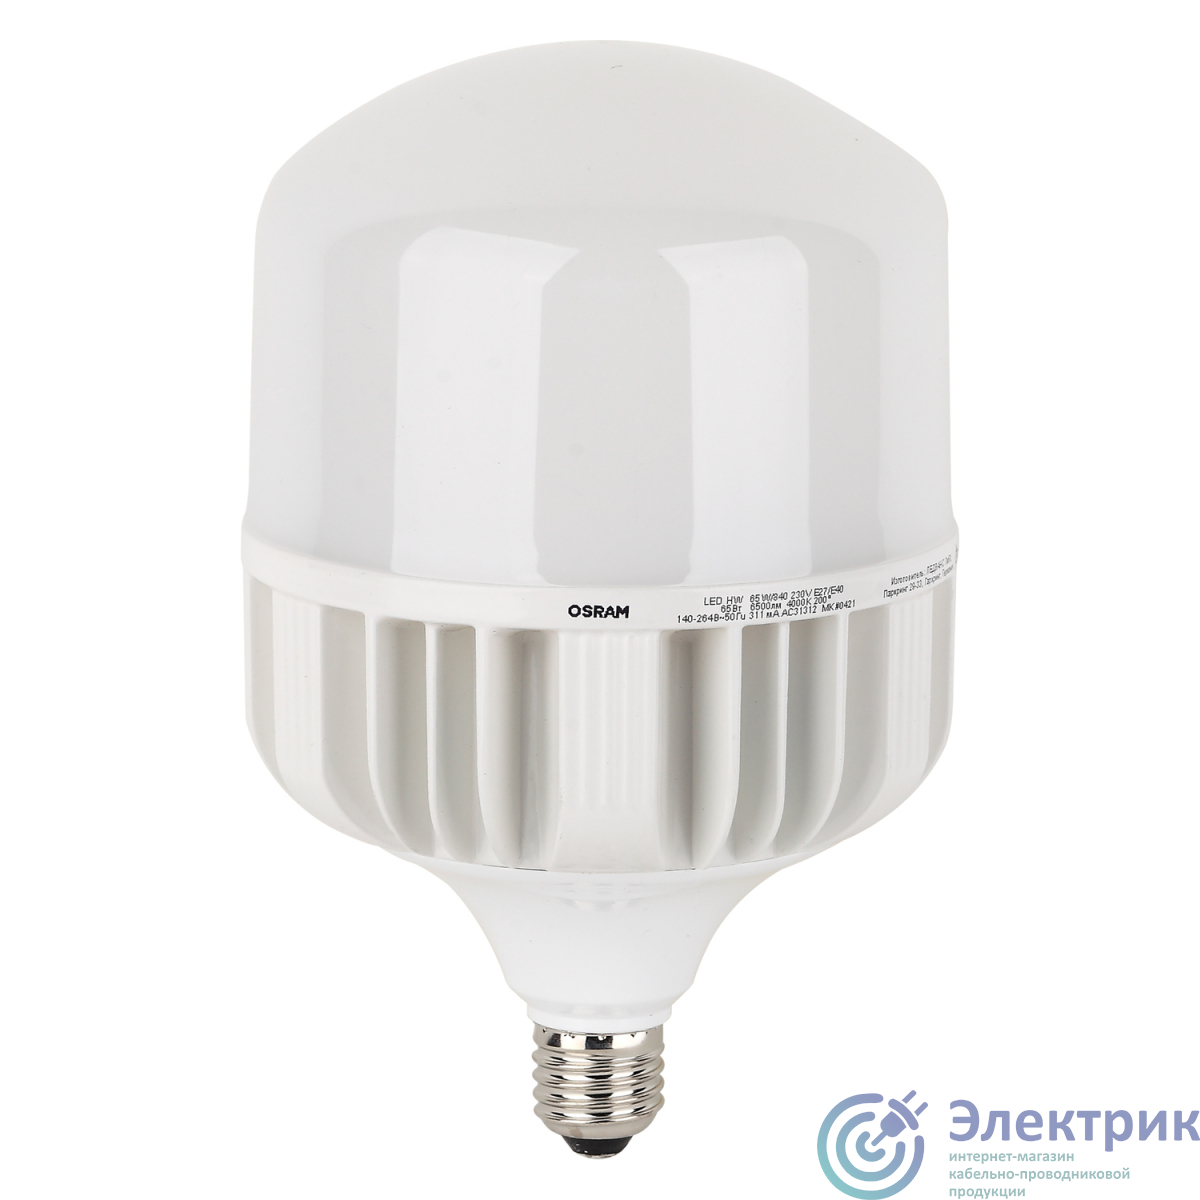 Лампа светодиодная LED HW 65Вт E27/E40 6500Лм, (замена 650Вт), нейтральный белый свет OSRAM